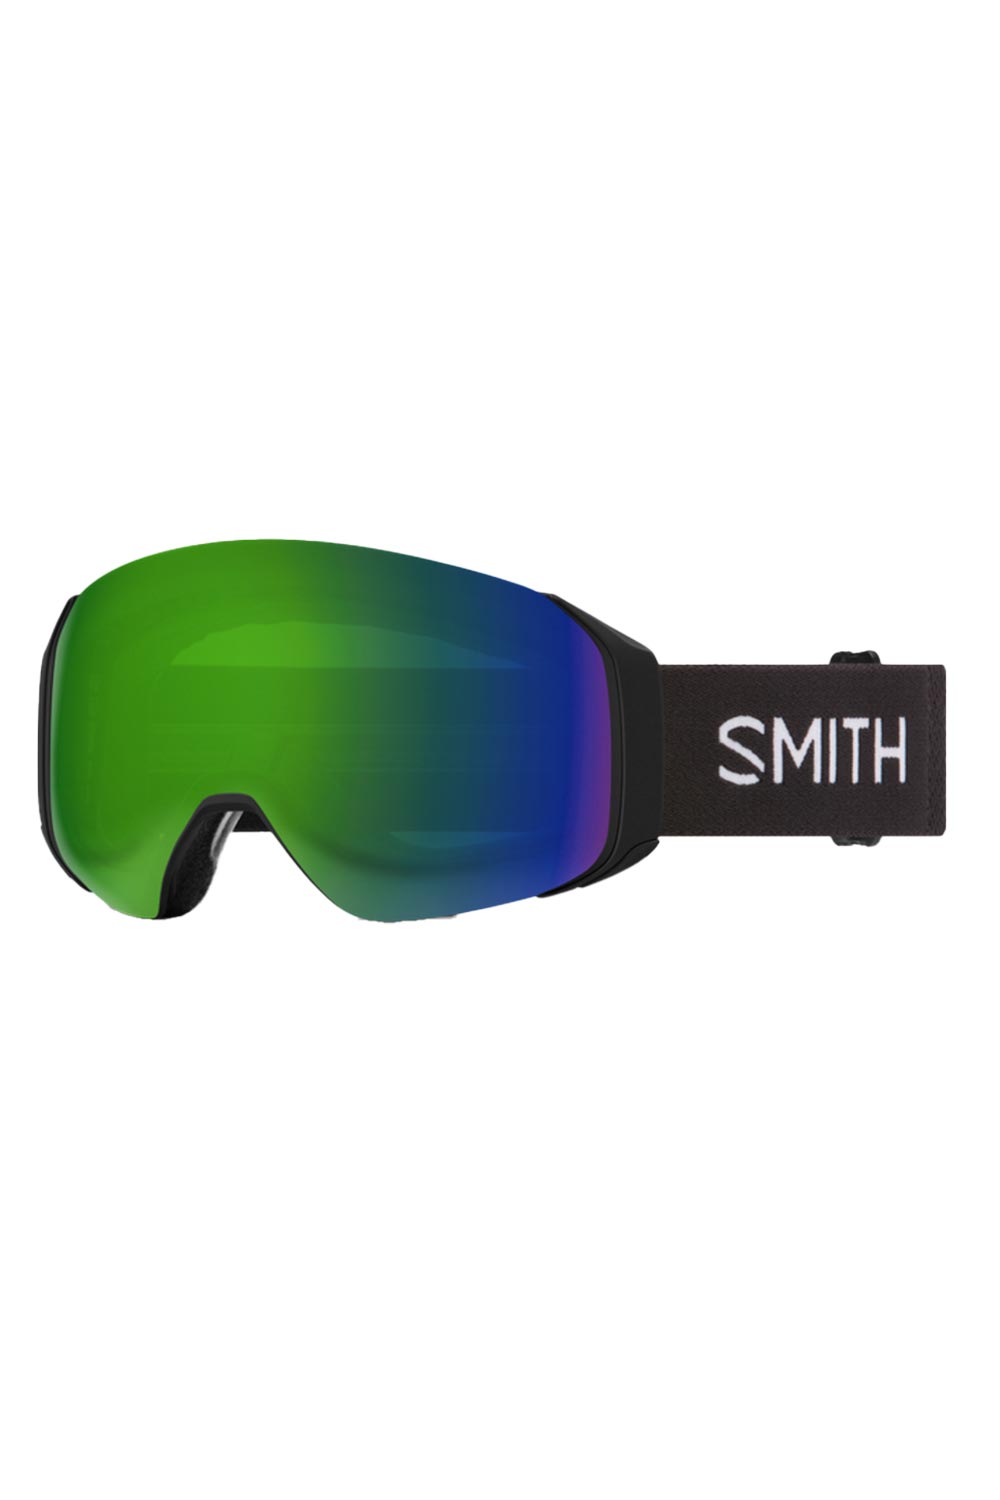 smith 4D mag ski goggles, black strap green lens